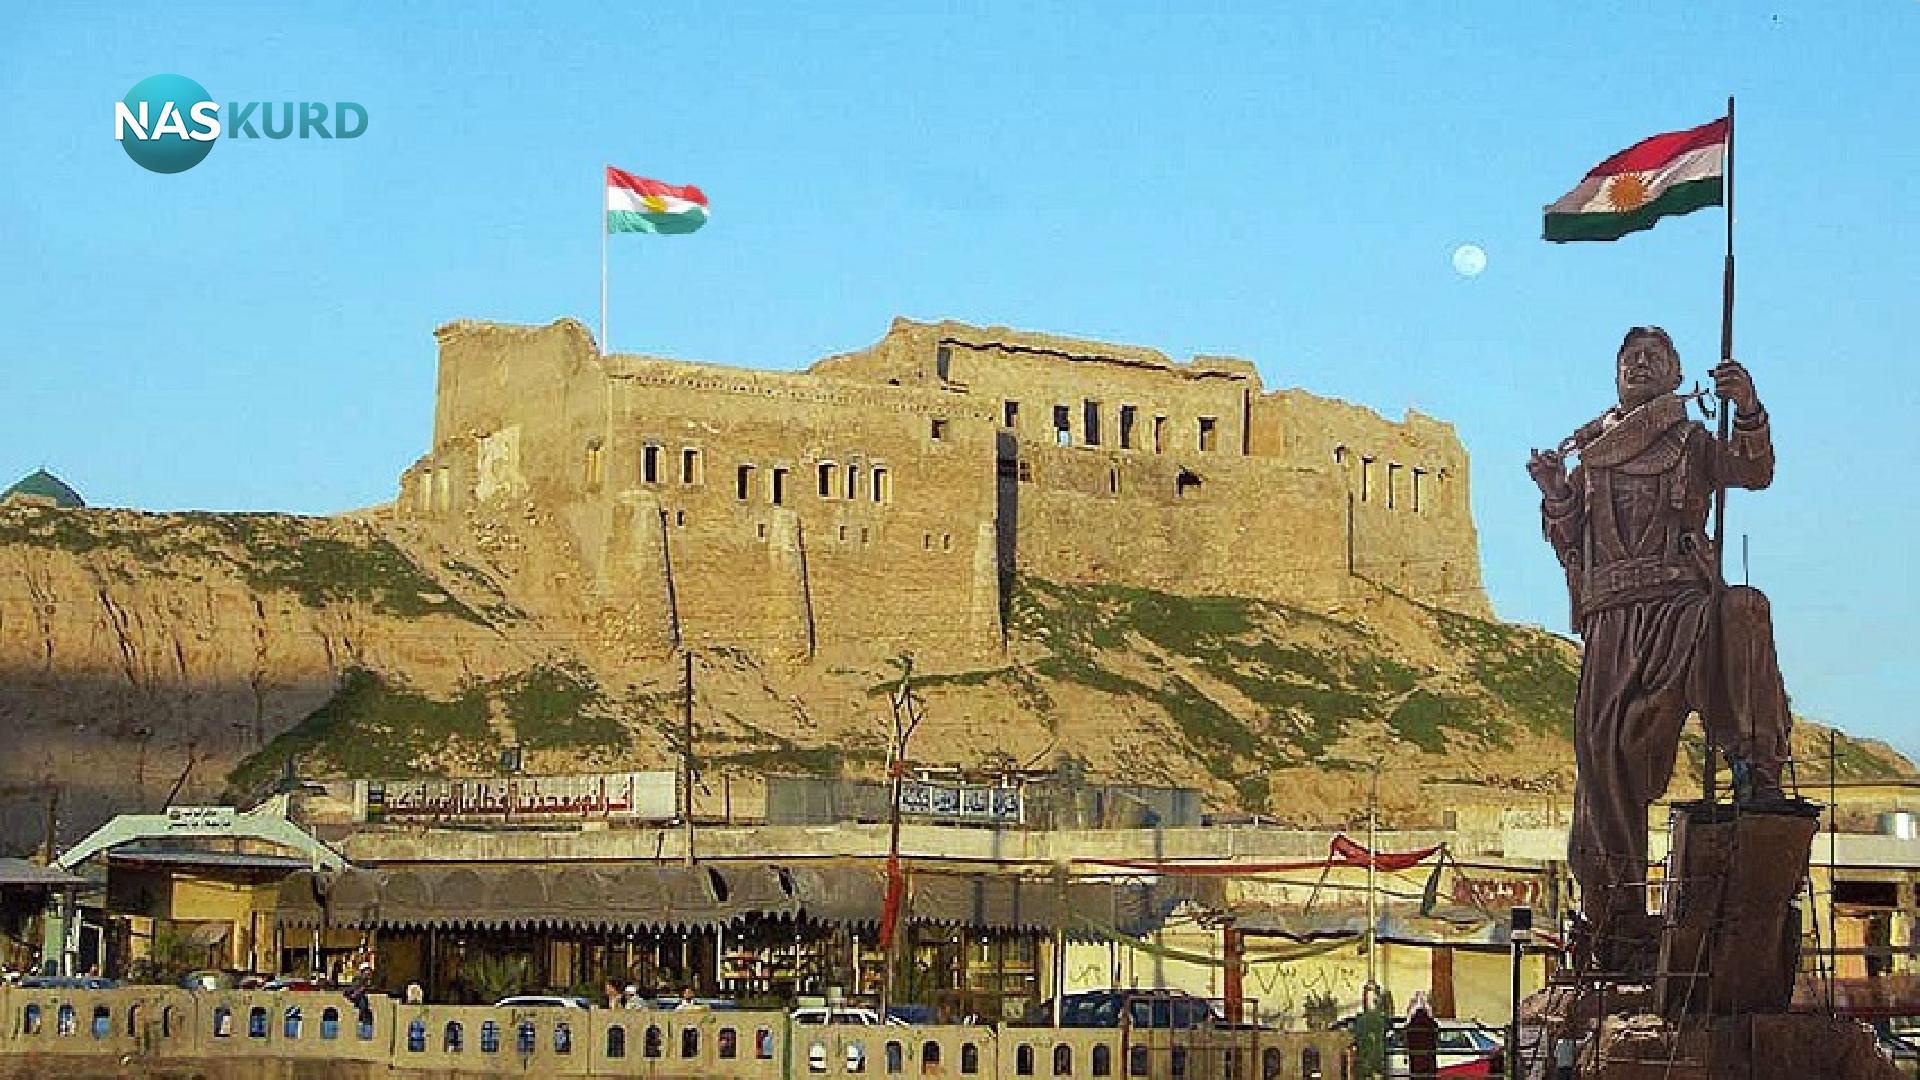 Efforts are underway to return Peshmerga forces to Kirkuk: commander